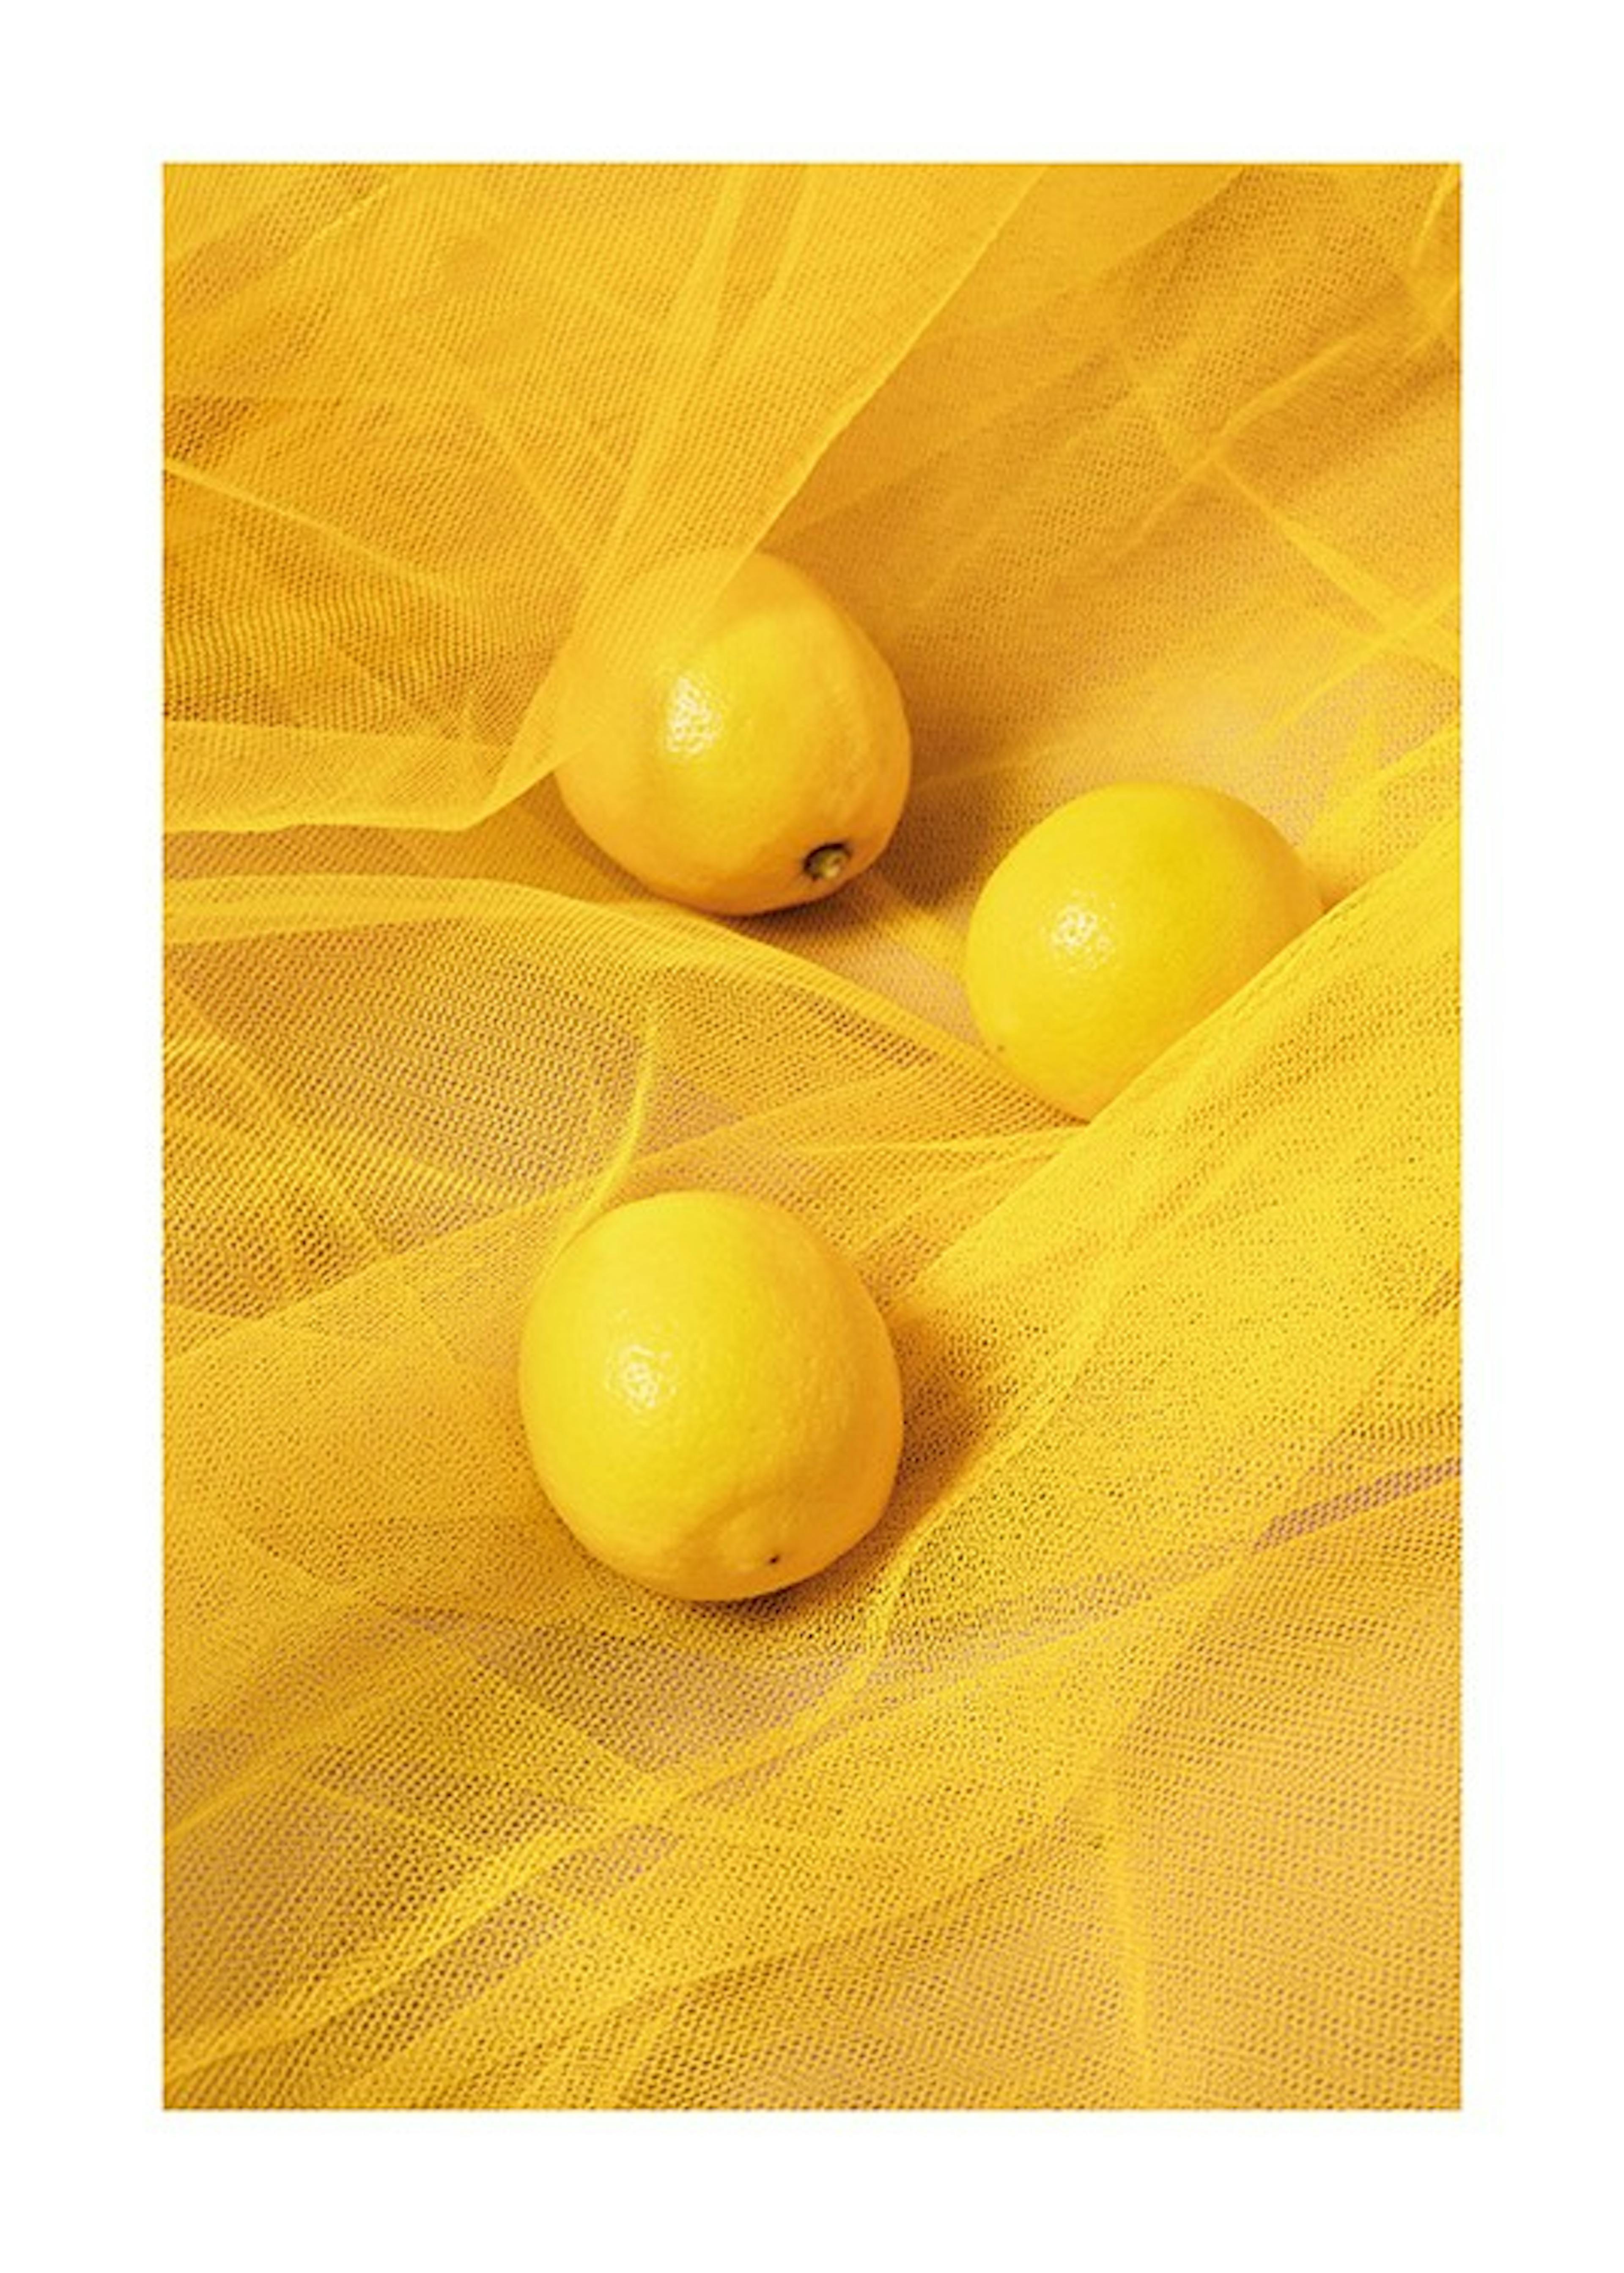 Tulle and Lemons Print 0